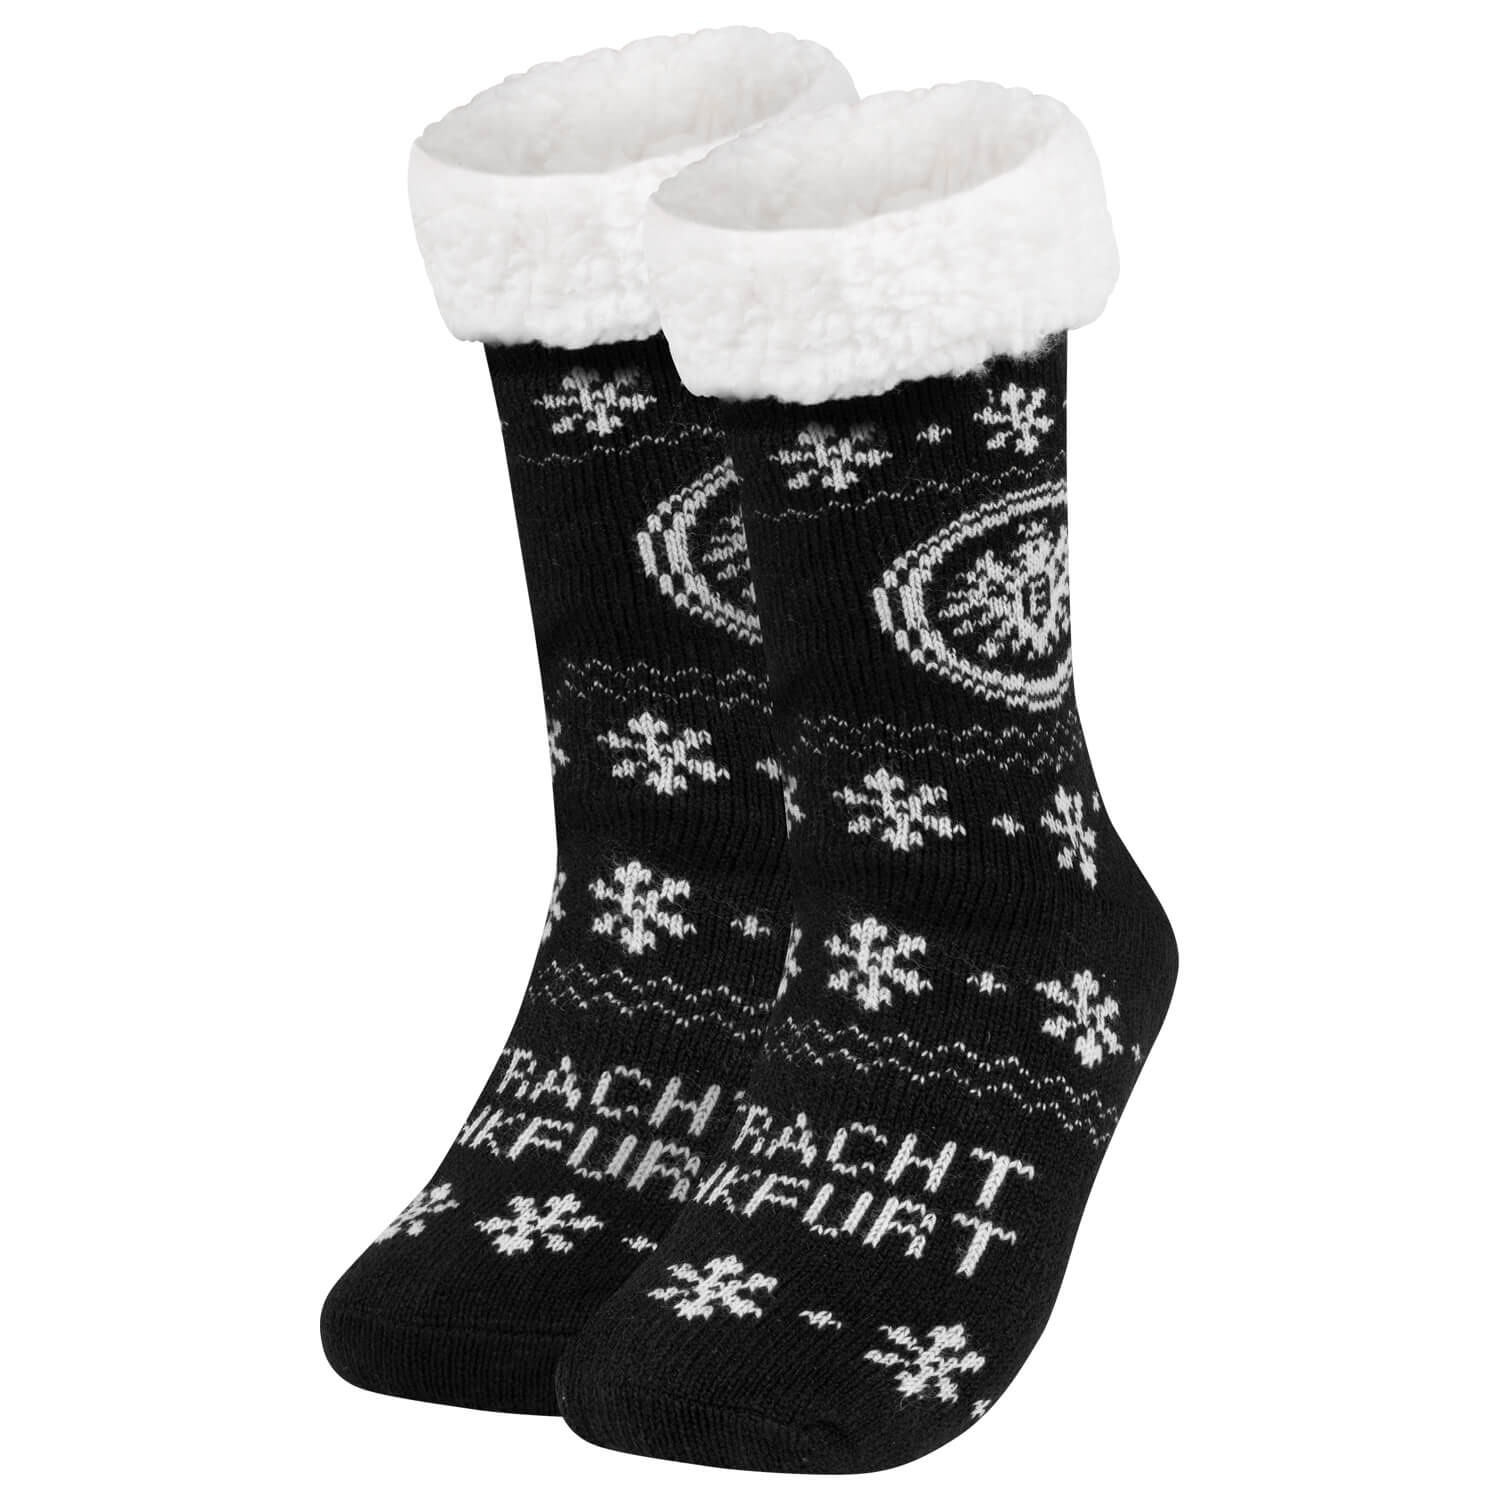 Bild 1: Slipper Socks Black/White 